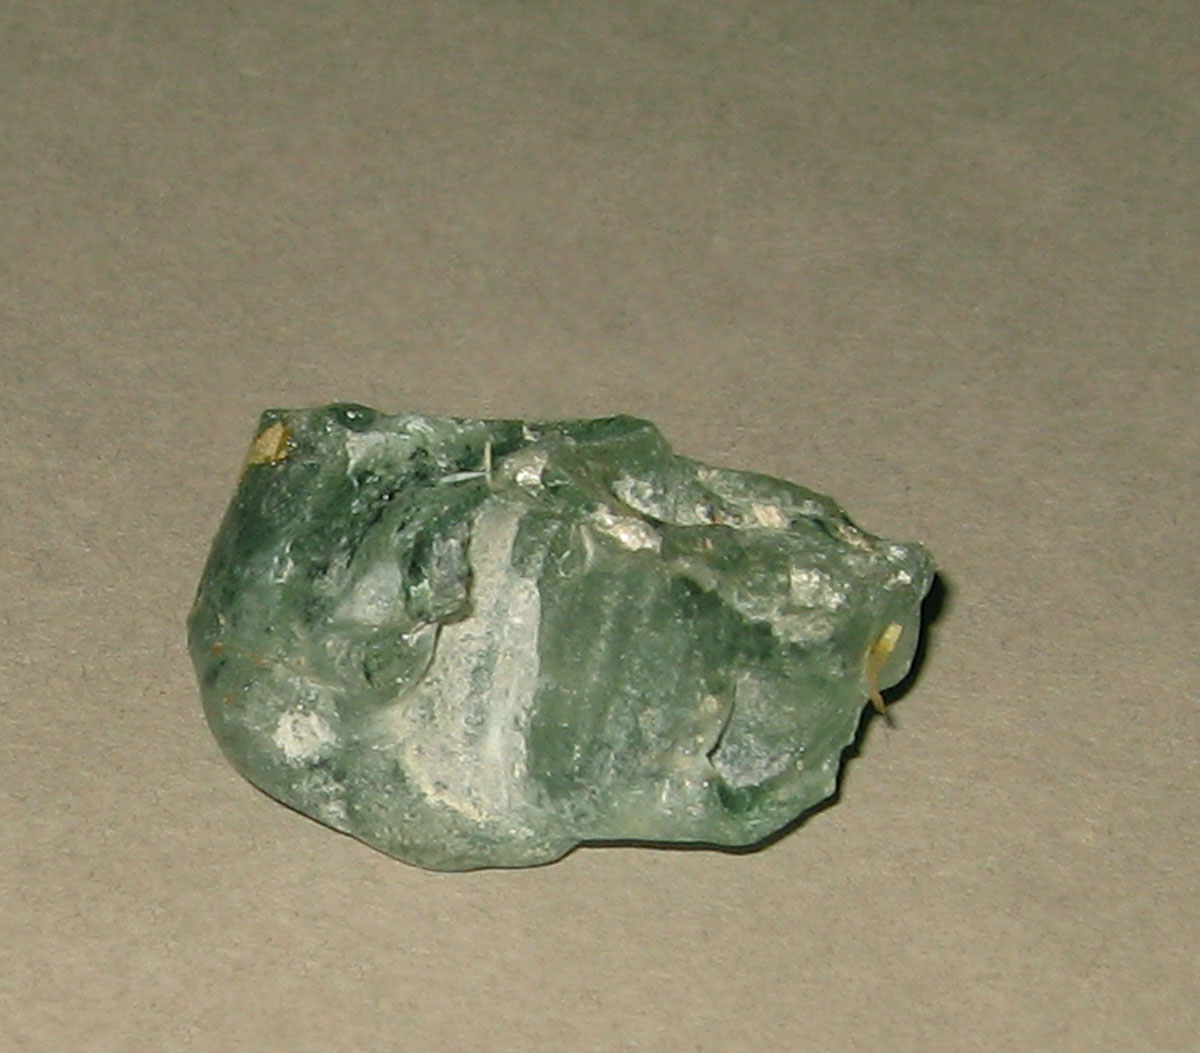 1971.0024.008 Glass fragment